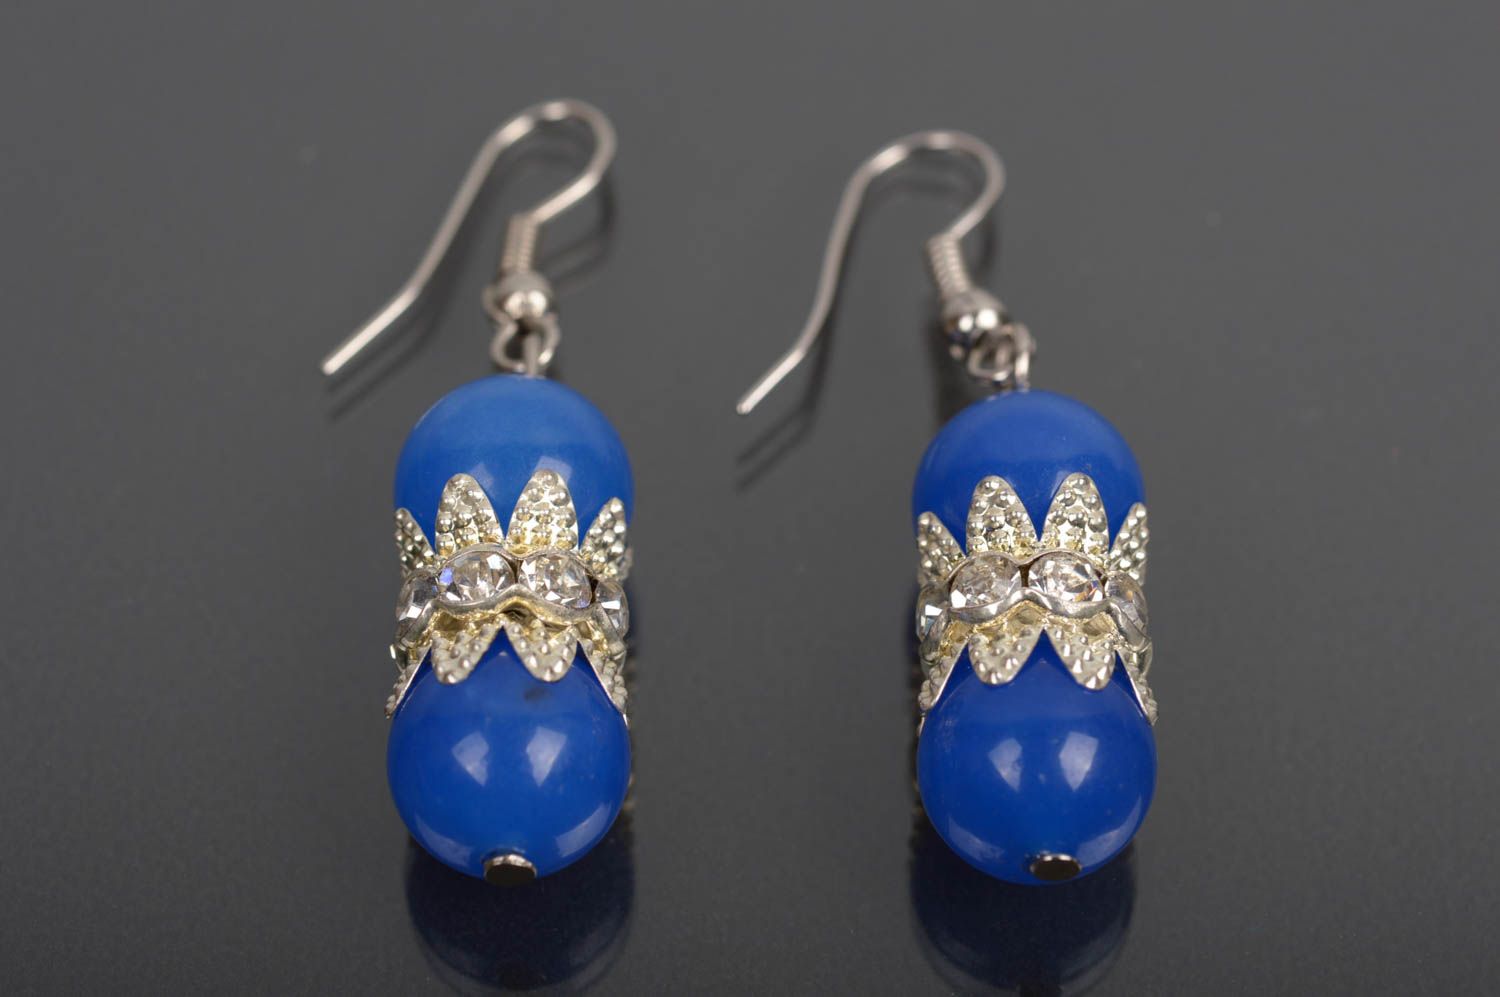 Handmade designer jewelry stylish beautiful earrings unusual earrings gift photo 1